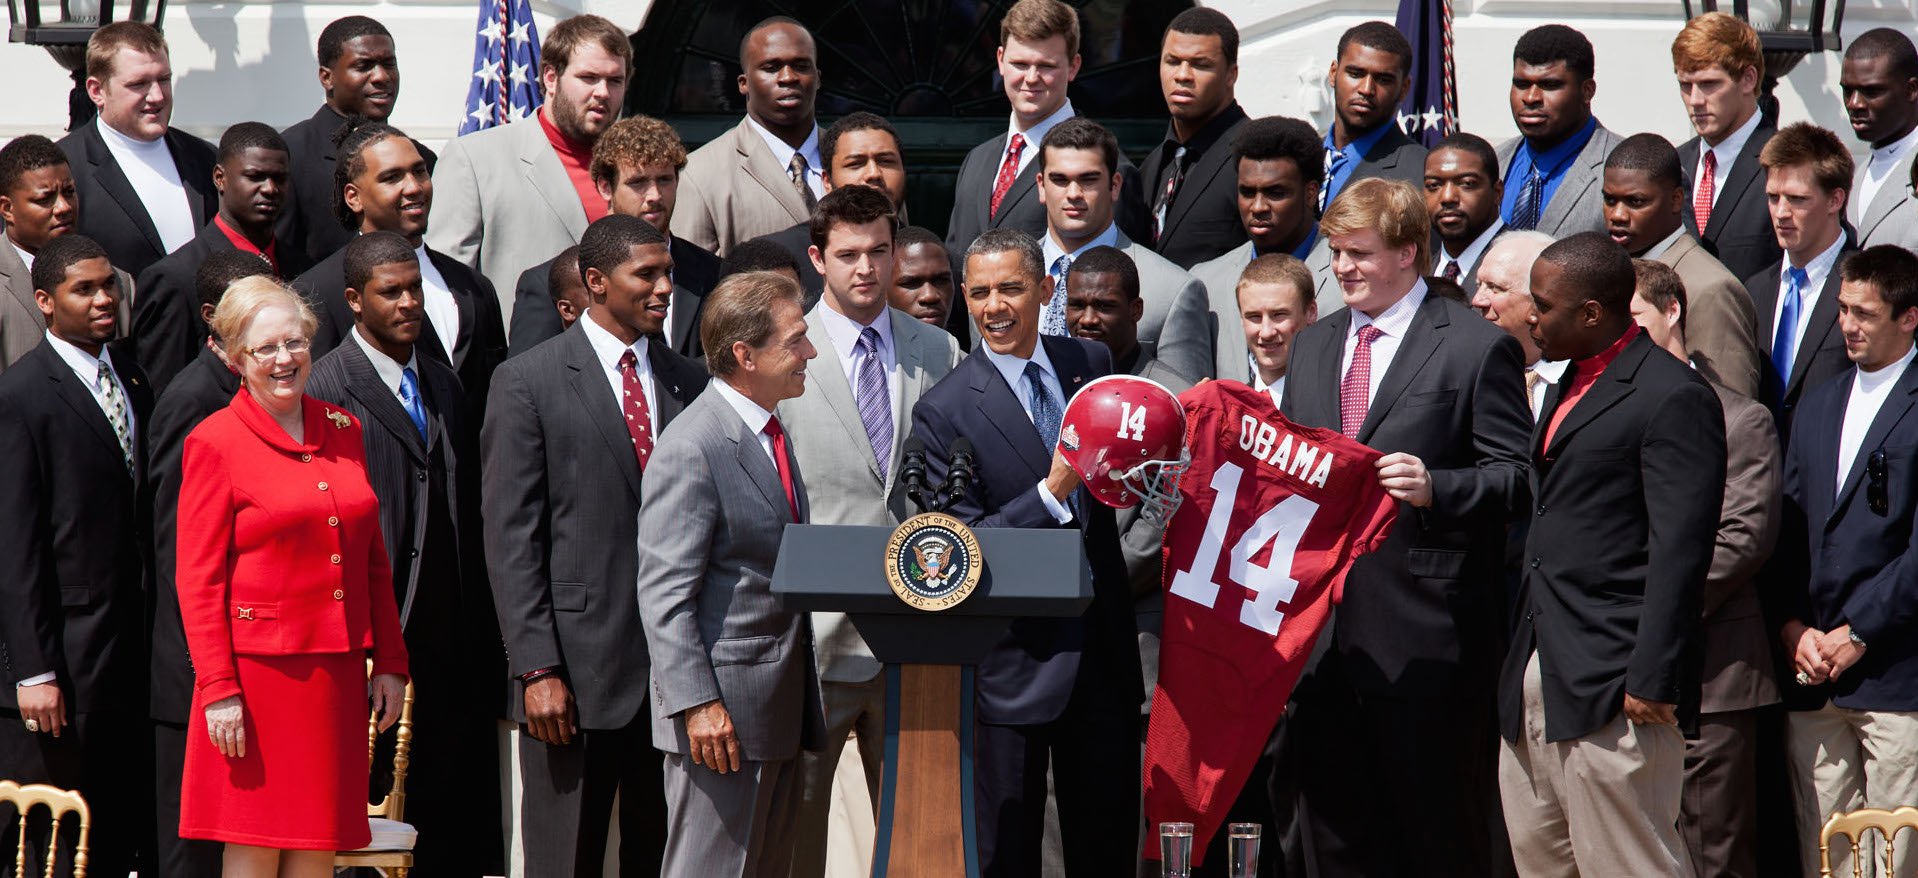 Obama receiving Alabama jersey